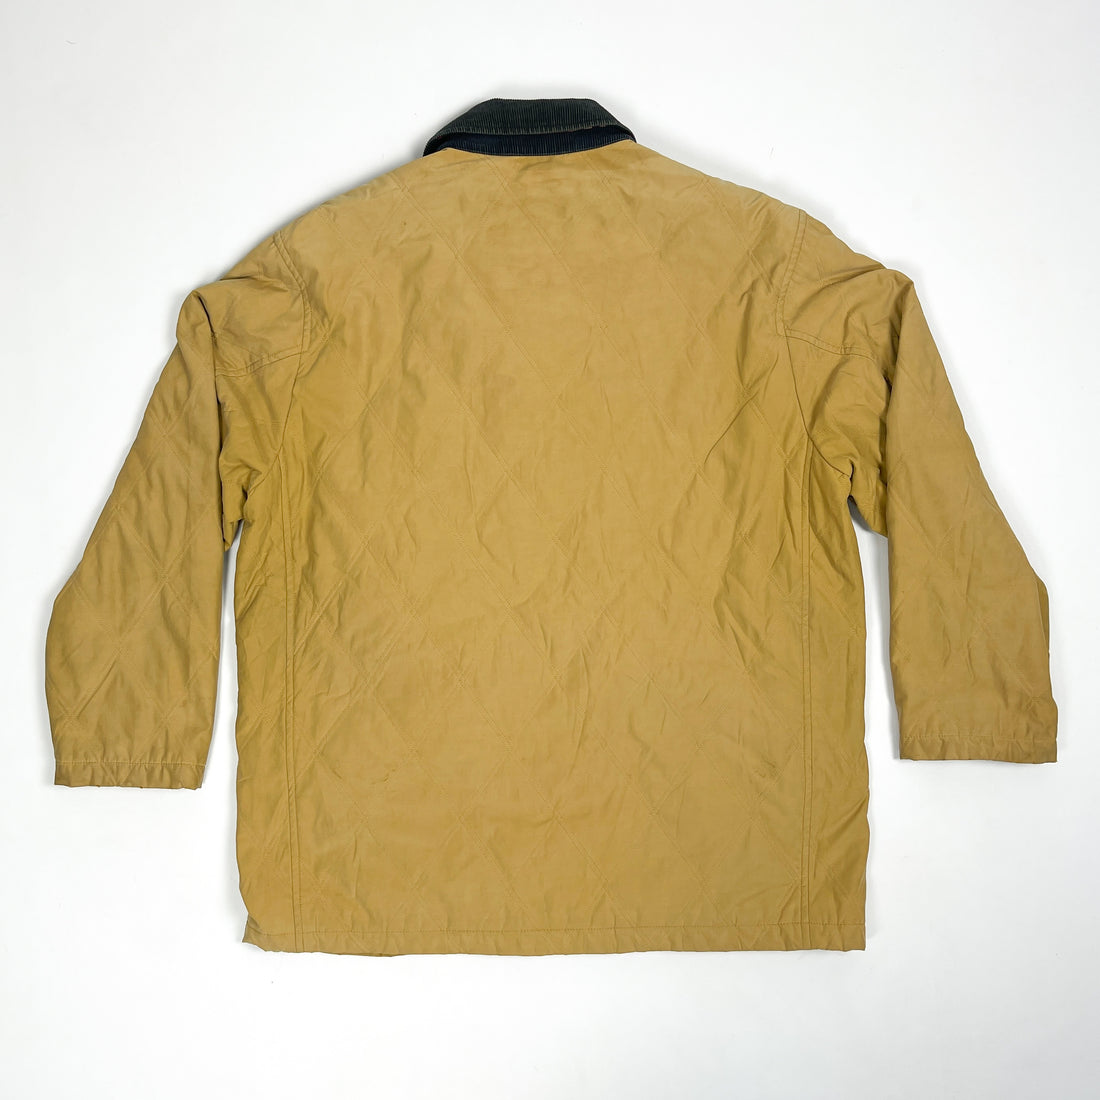 Burberrys Yellow Sailing Jacket 1990's